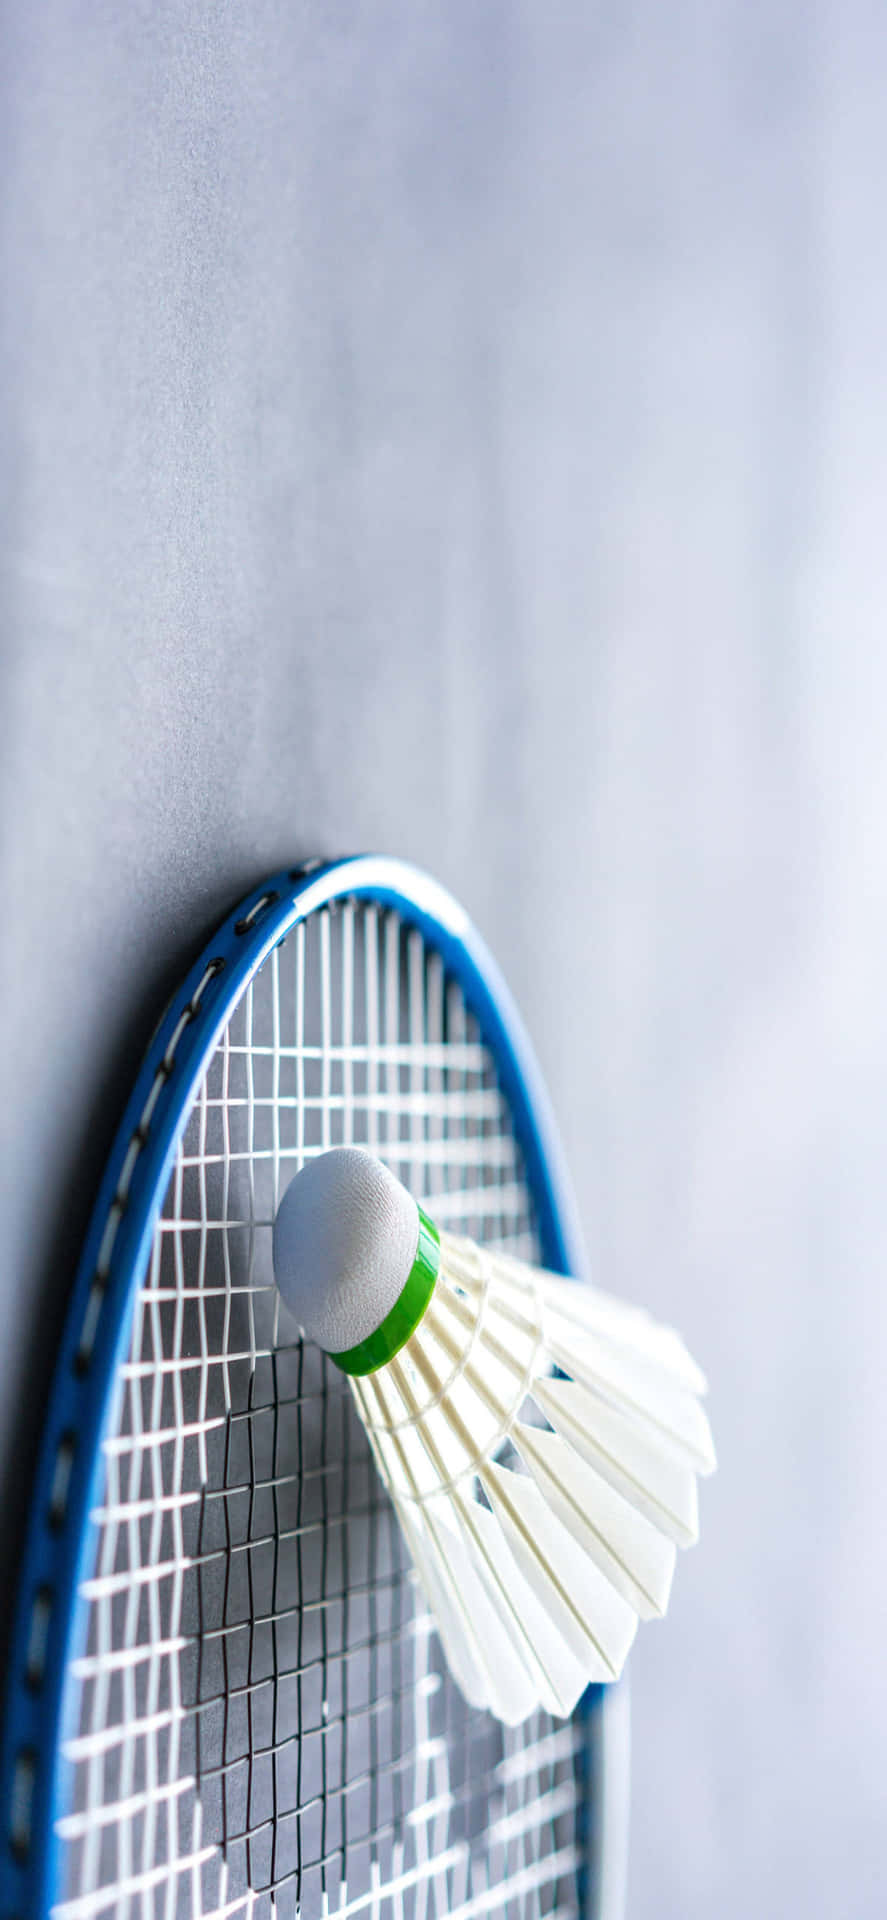 Badminton Shuttlecock On A Racket